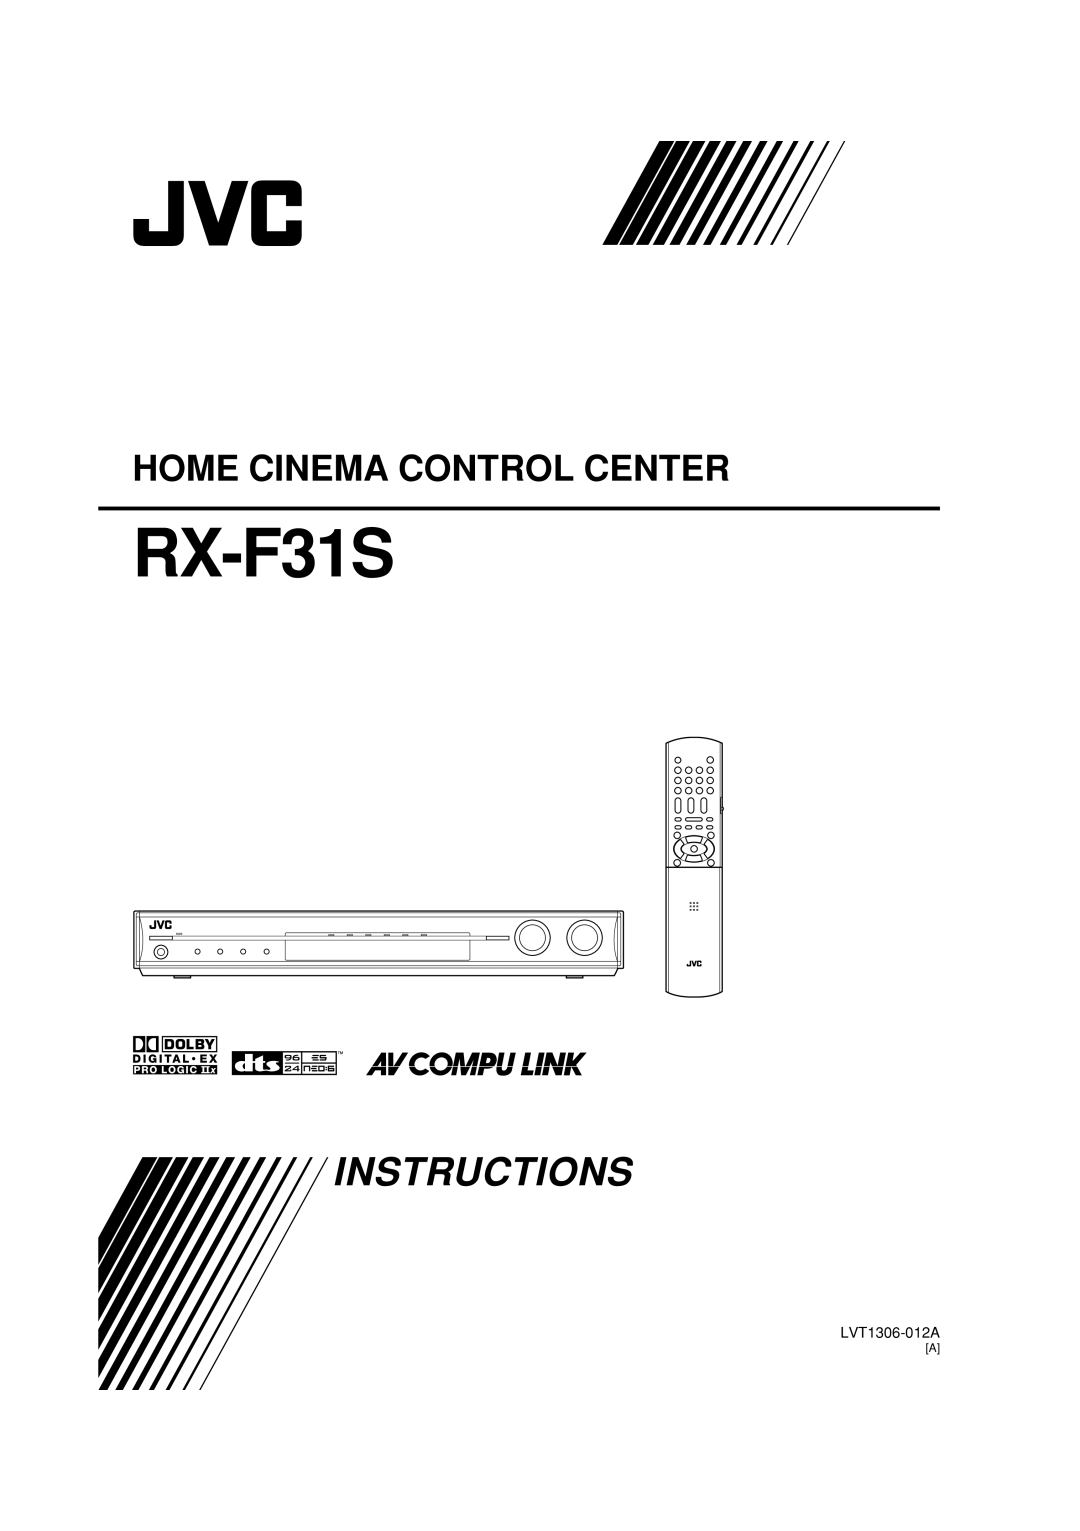 JVC RX-F31S manual Instructions, Home Cinema Control Center, LVT1306-012A 